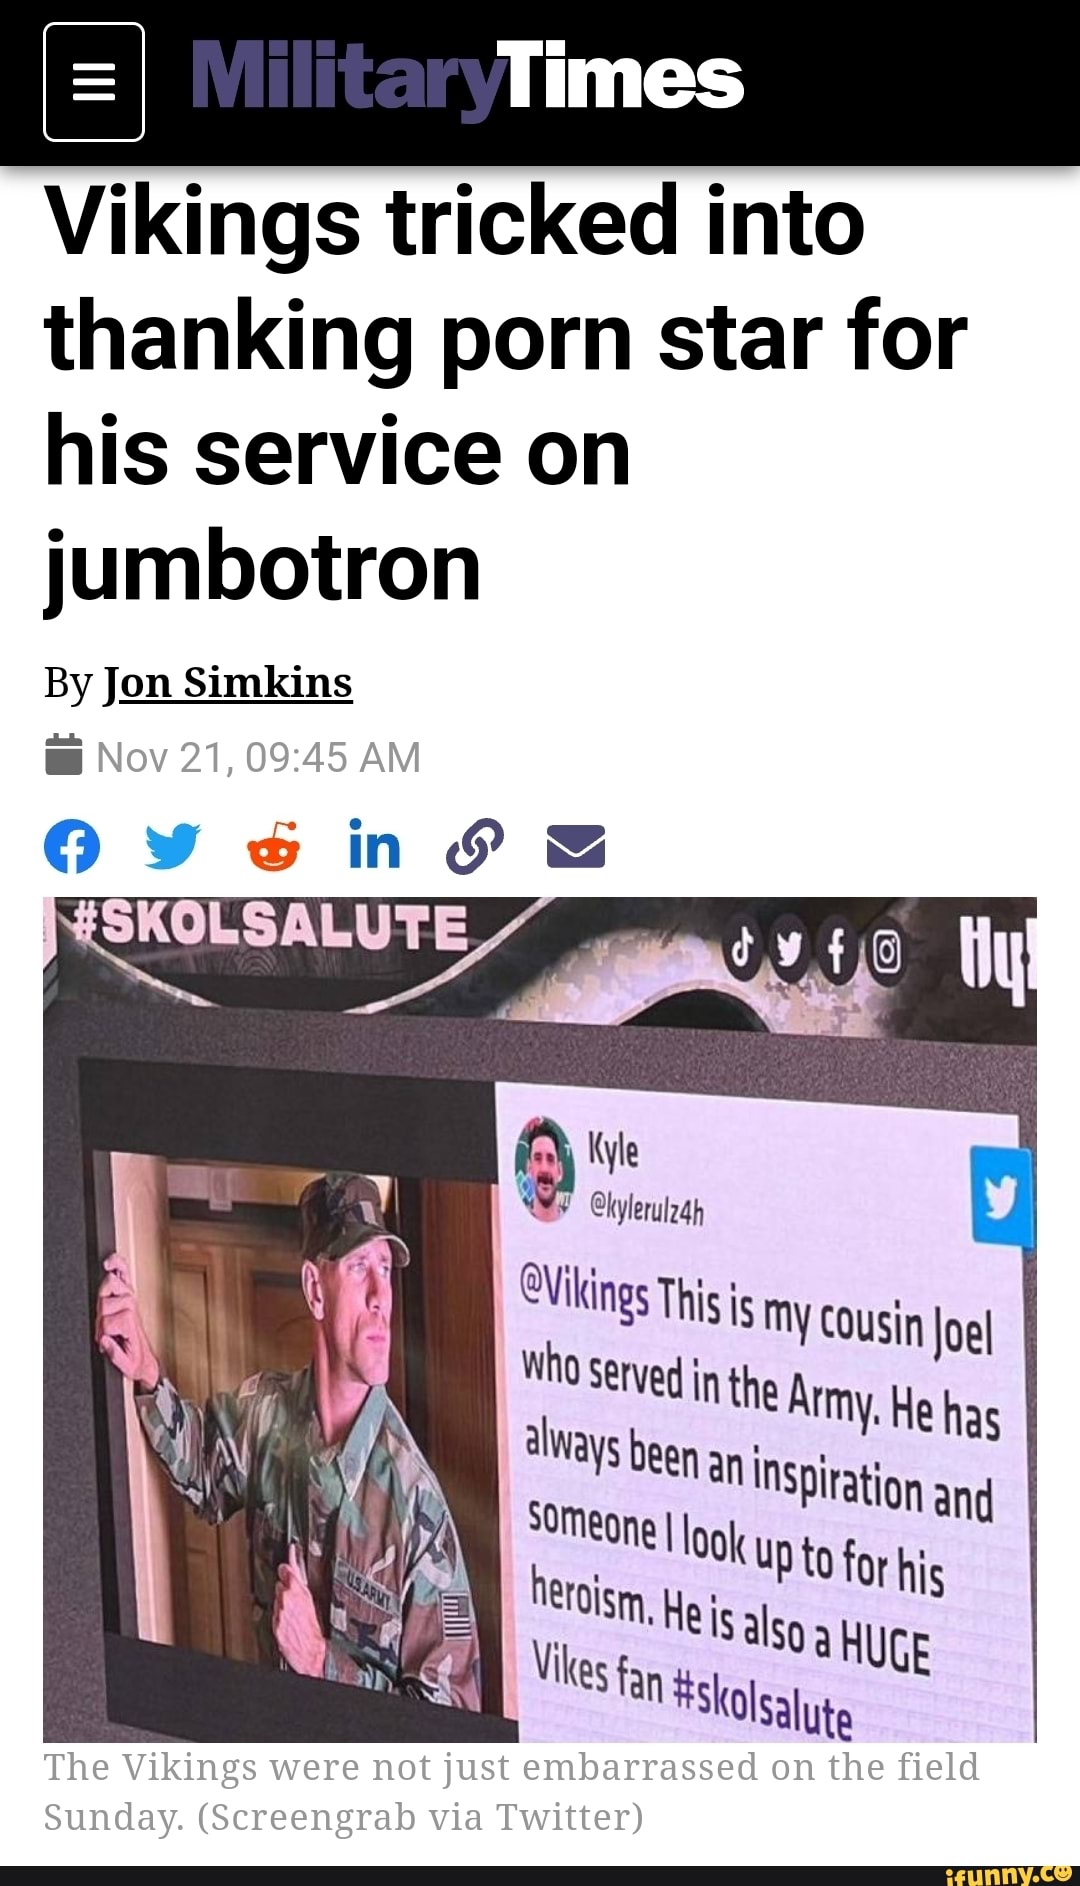 Times Vikings tricked tar for thanking porn star his service on jumbotron  By Jon Simkins Nov